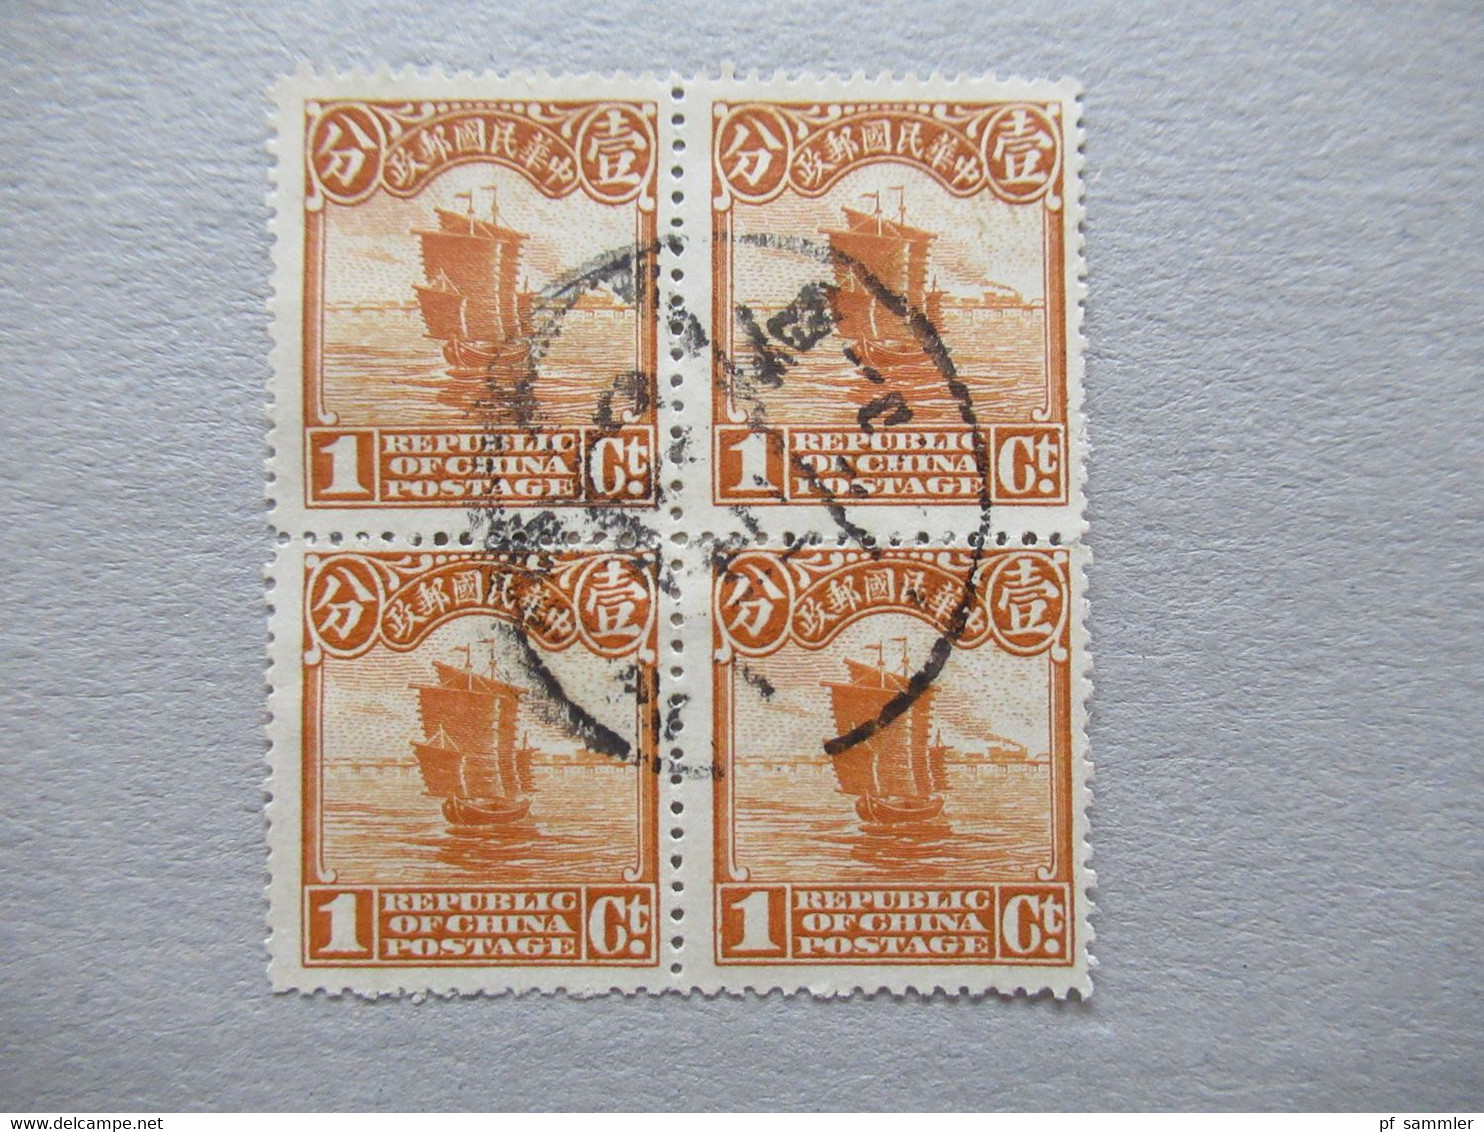 Asien China Volksrepublik Dschunke 1 Cent Im 4er Block / Gestempel 1920er Jahre - 1912-1949 Repubblica